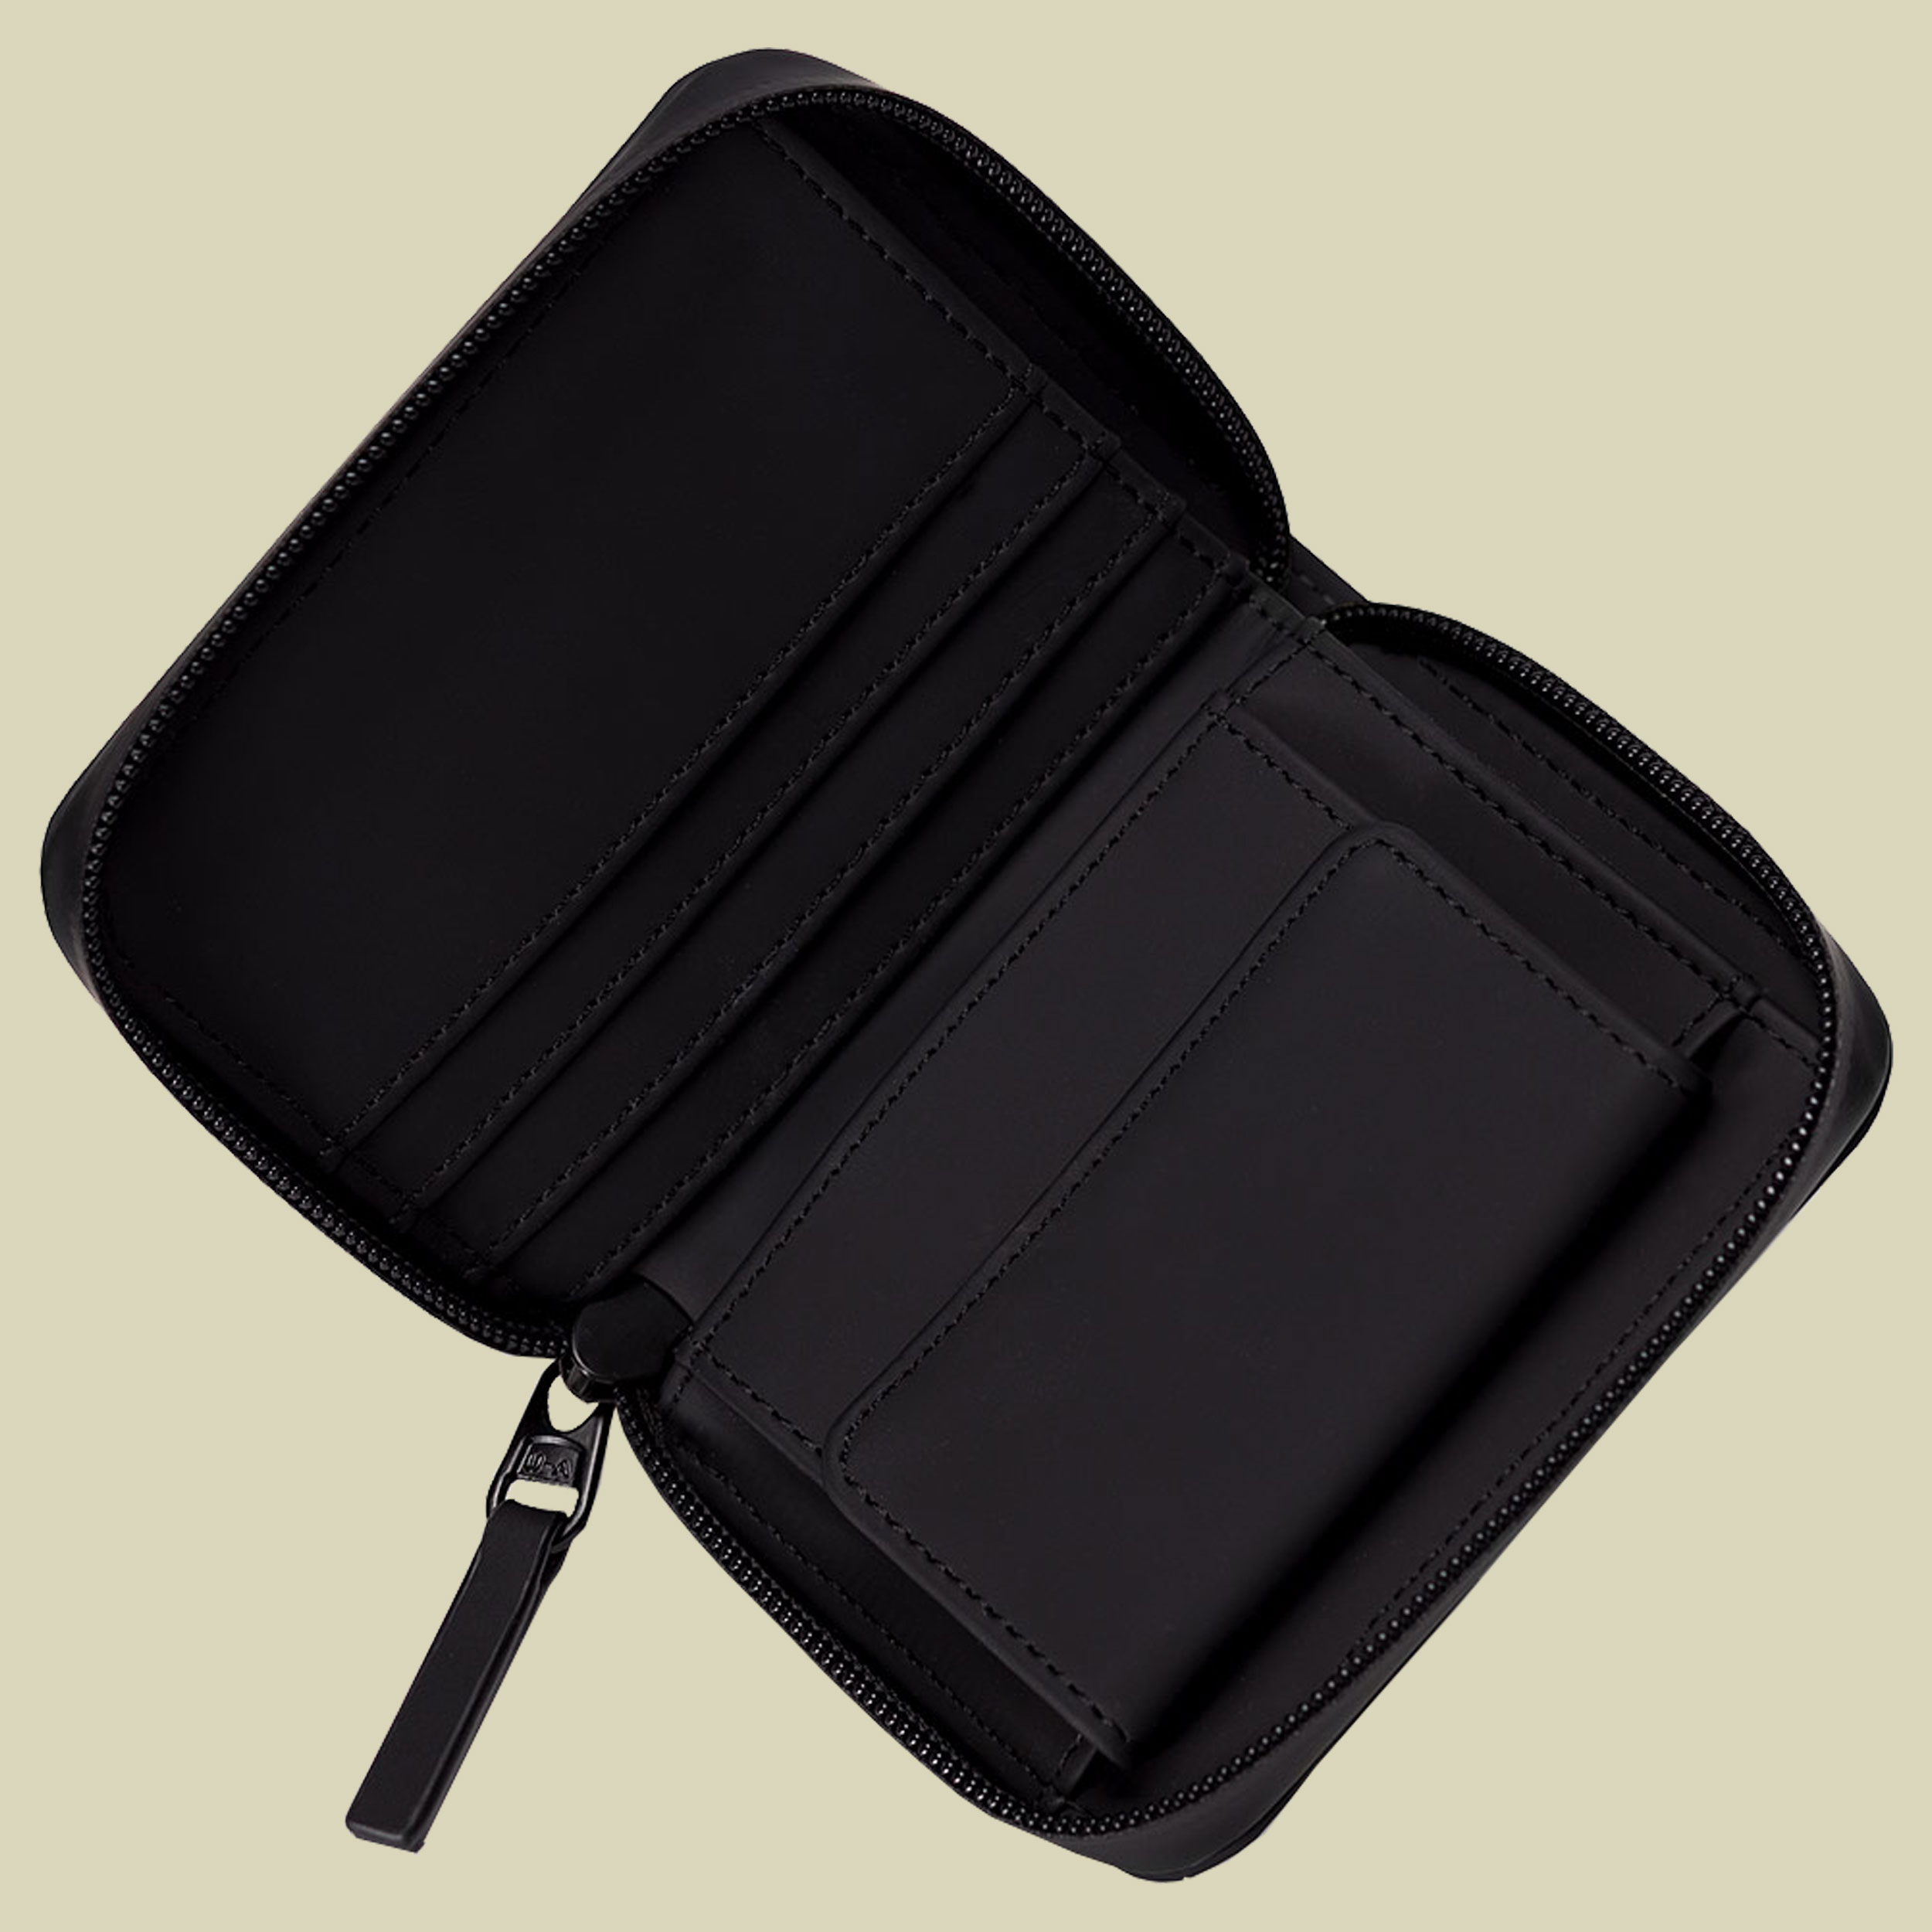 DENAR Wallet Lotus Series Größe one size Farbe black